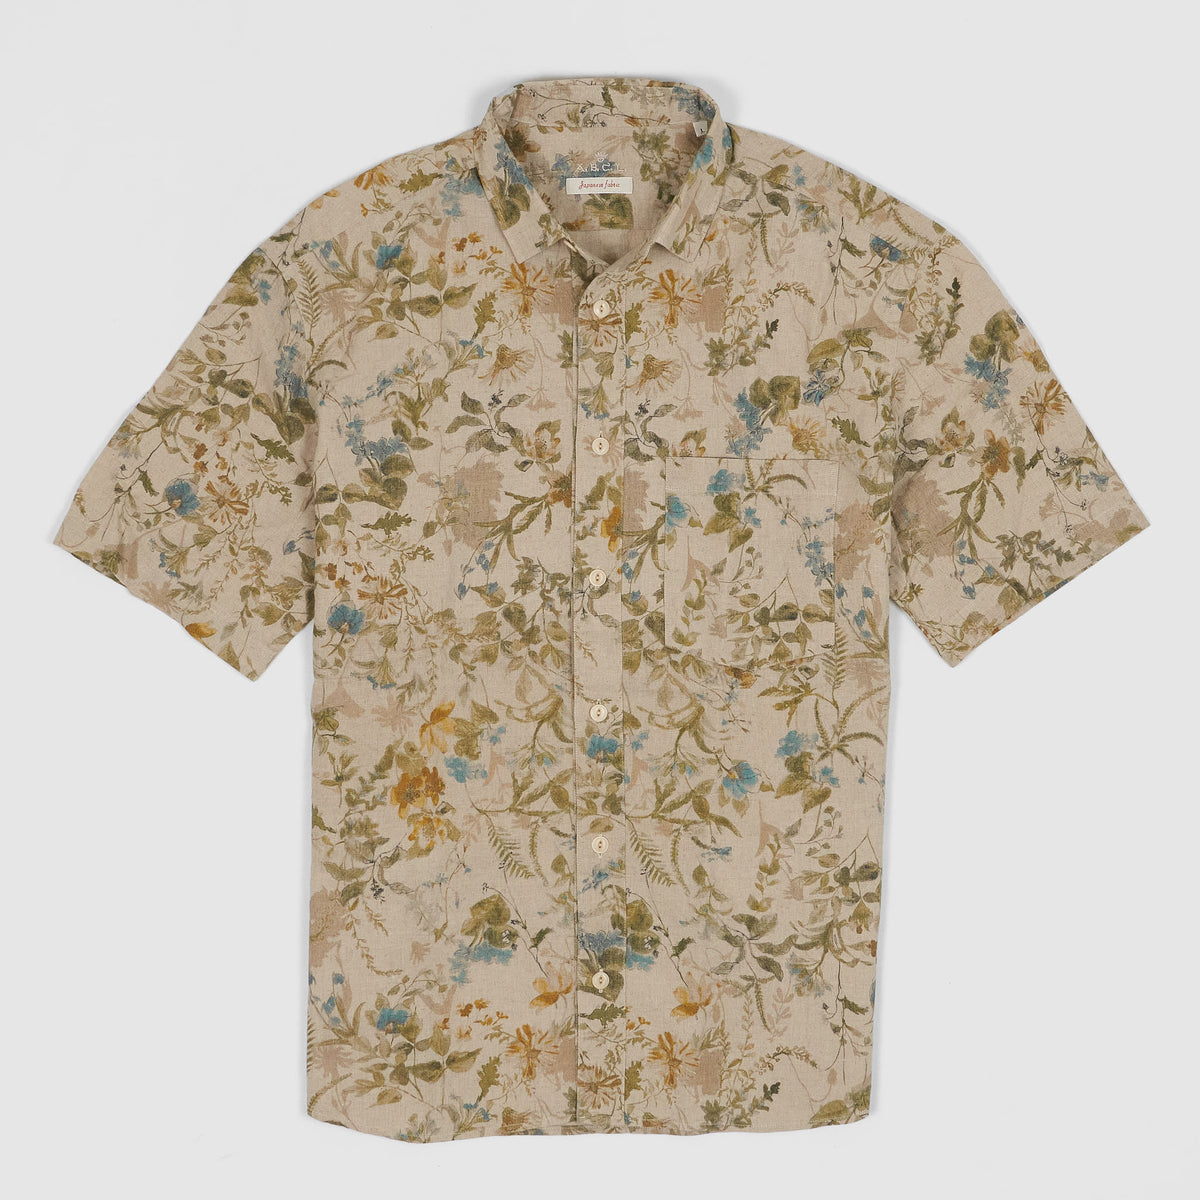 A.B.C.L Short Sleeve Printed Linen Shirt